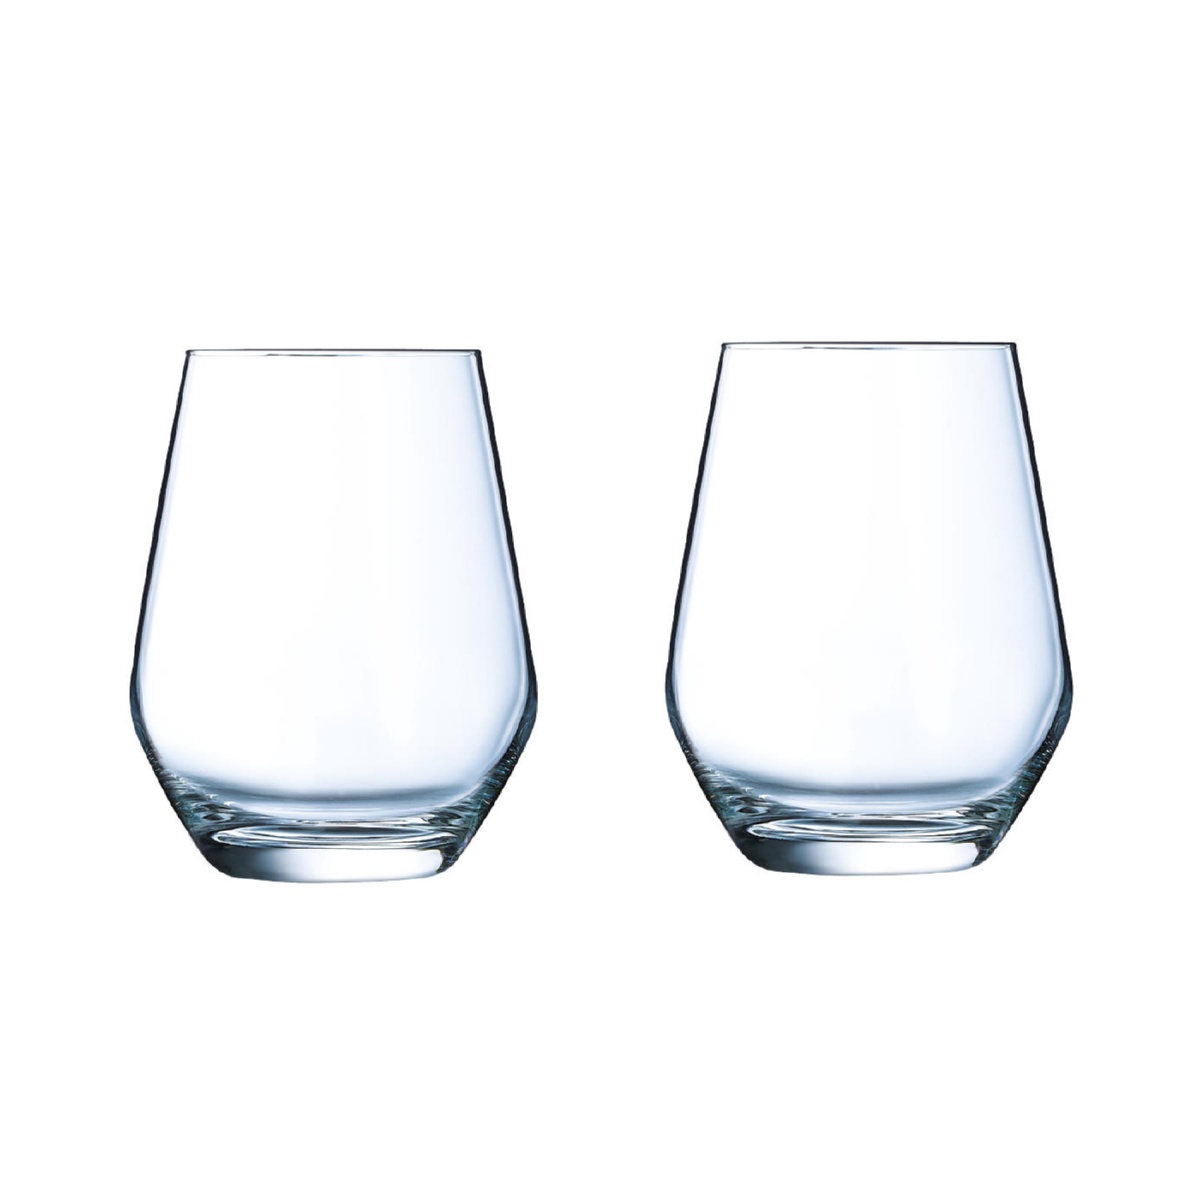 Набор стаканов Gipfel Vina Juliette 51131 2 предмета набор бокалов gipfel vina juliette 51133 2 предмета